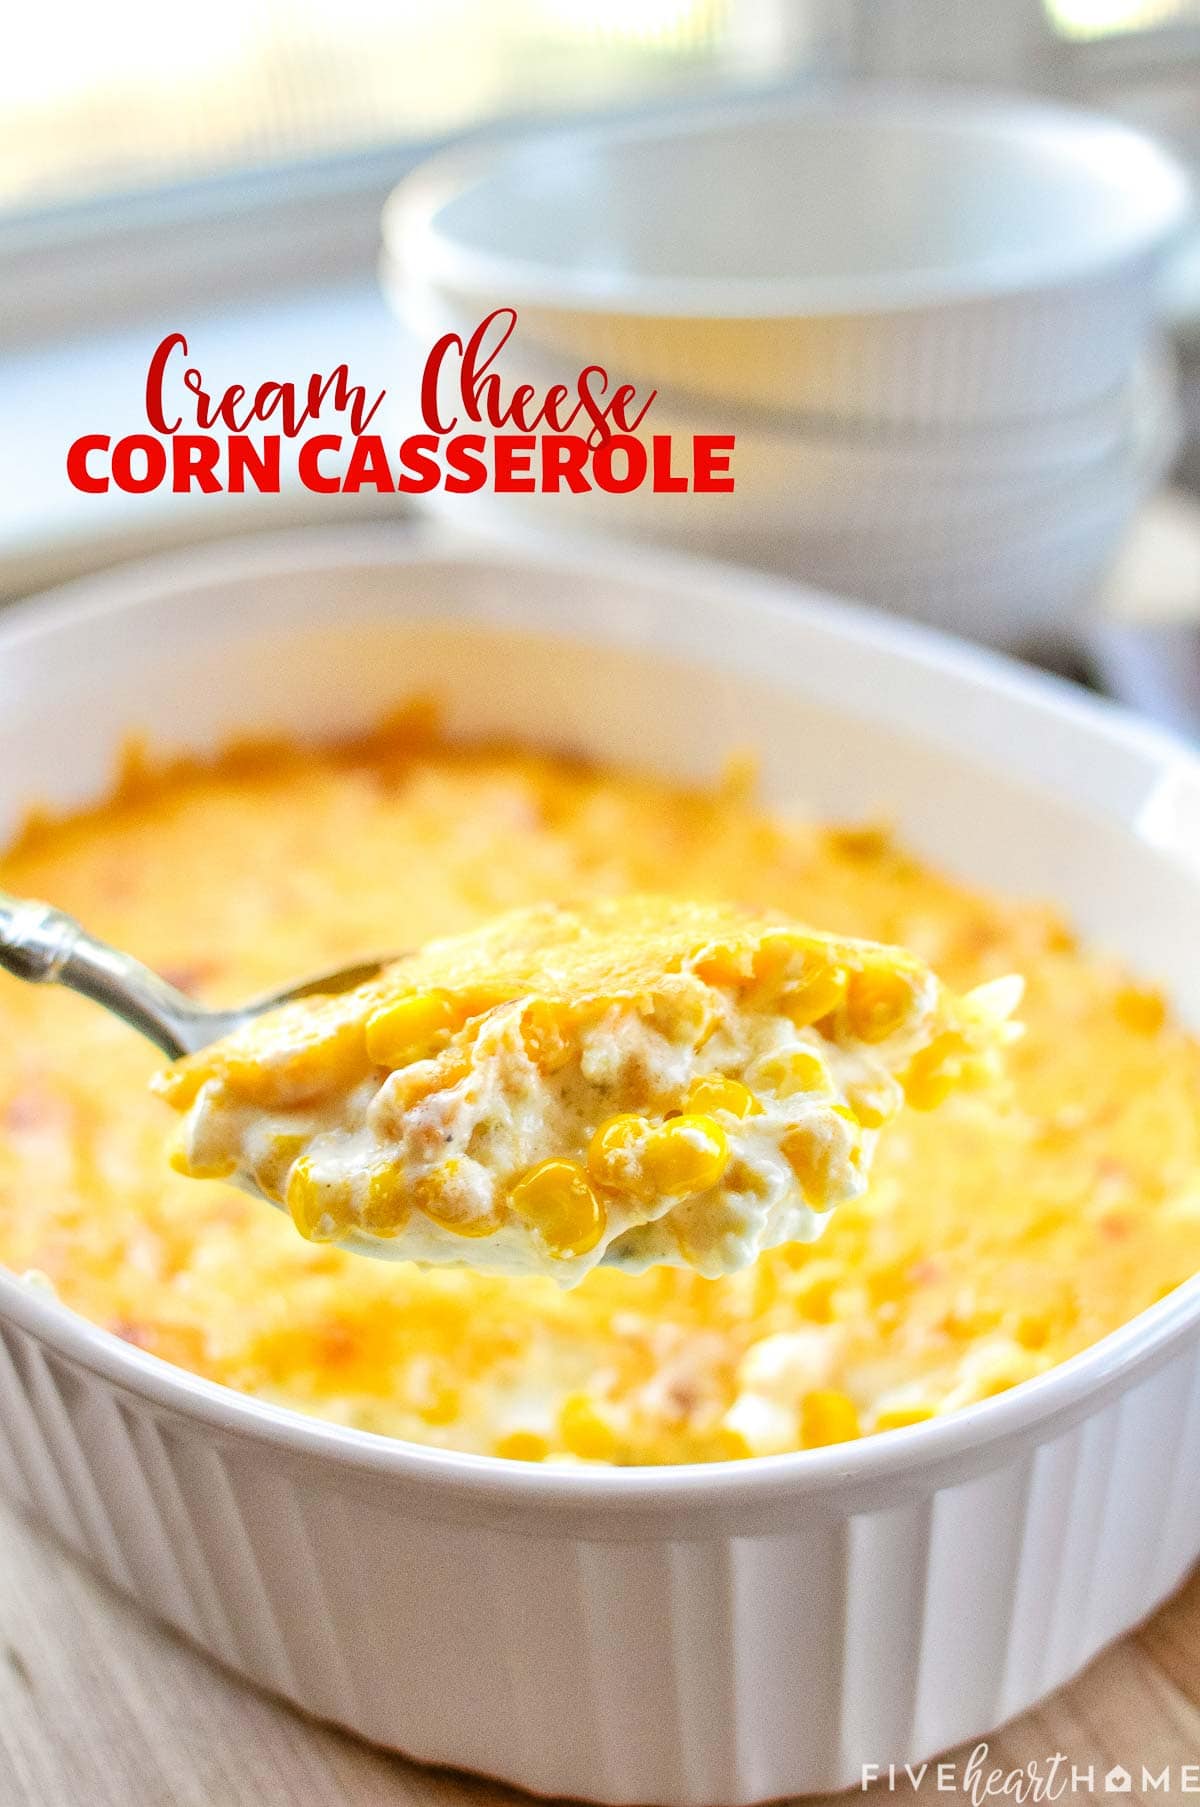 Cream Cheese Corn Casserole with text overlay.